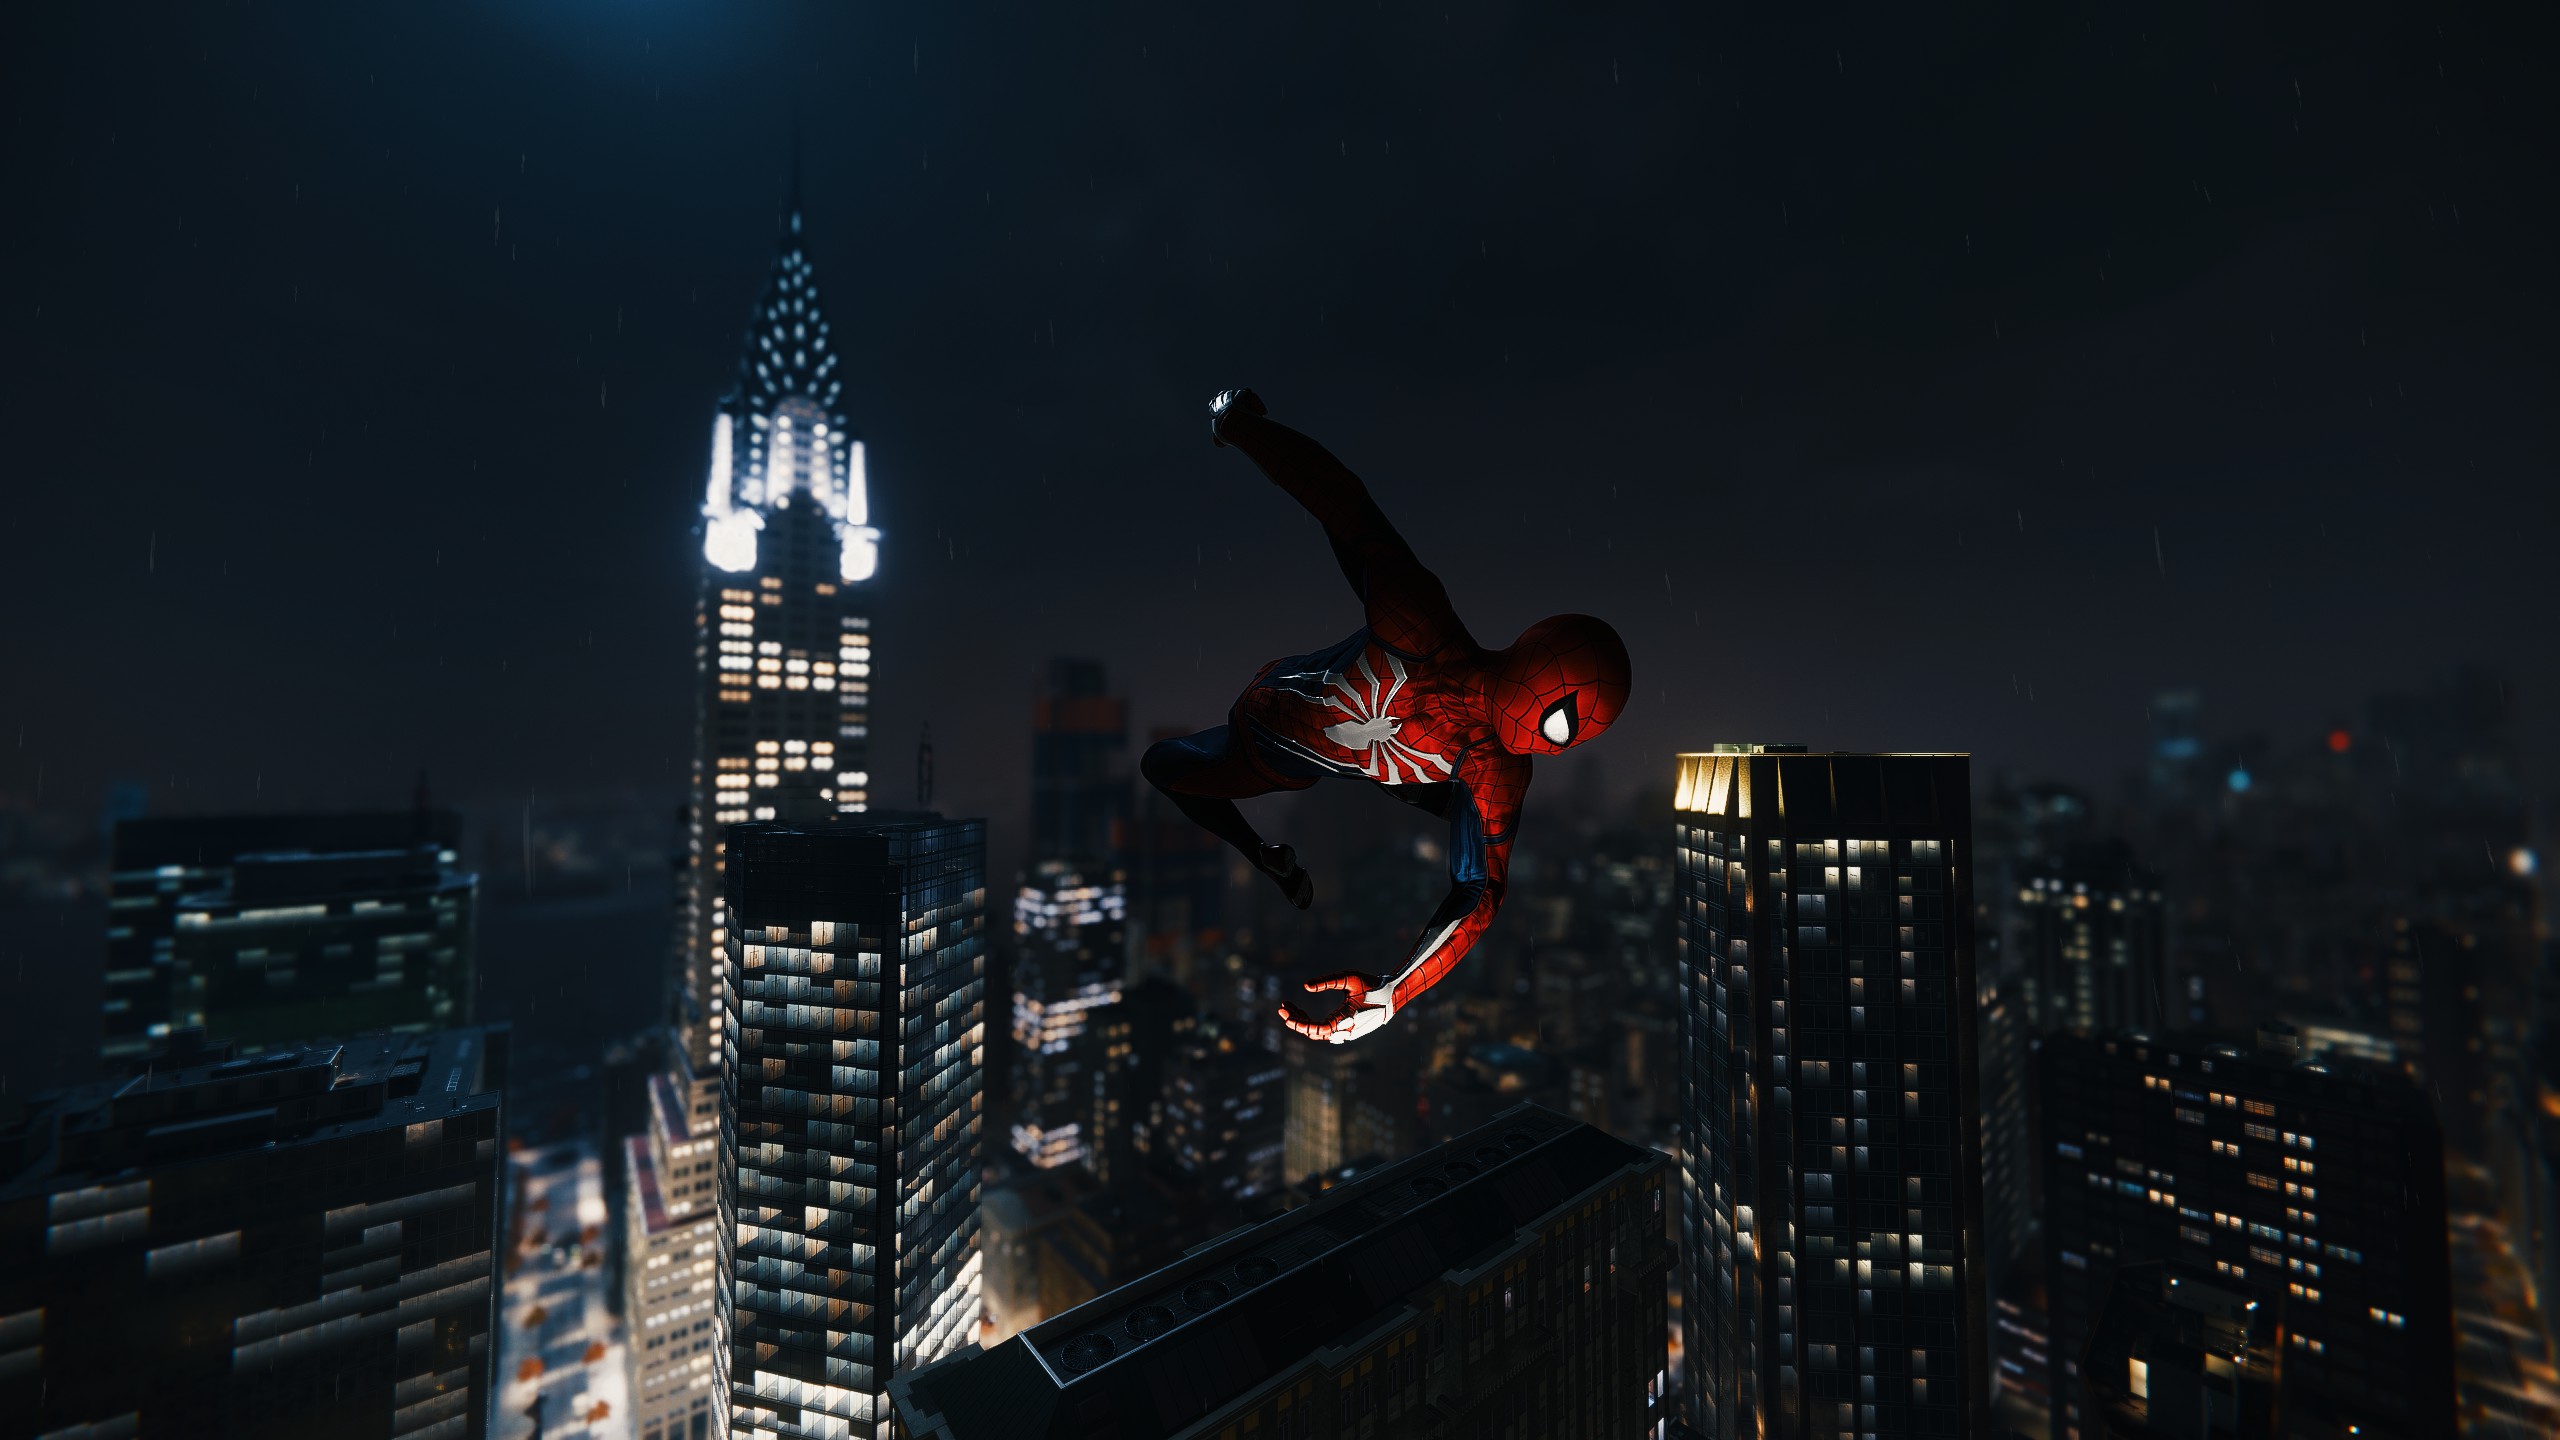 General 2560x1440 Spider-Man Remastered video games jumping Marvel Super Heroes CGI superhero Spider-Man